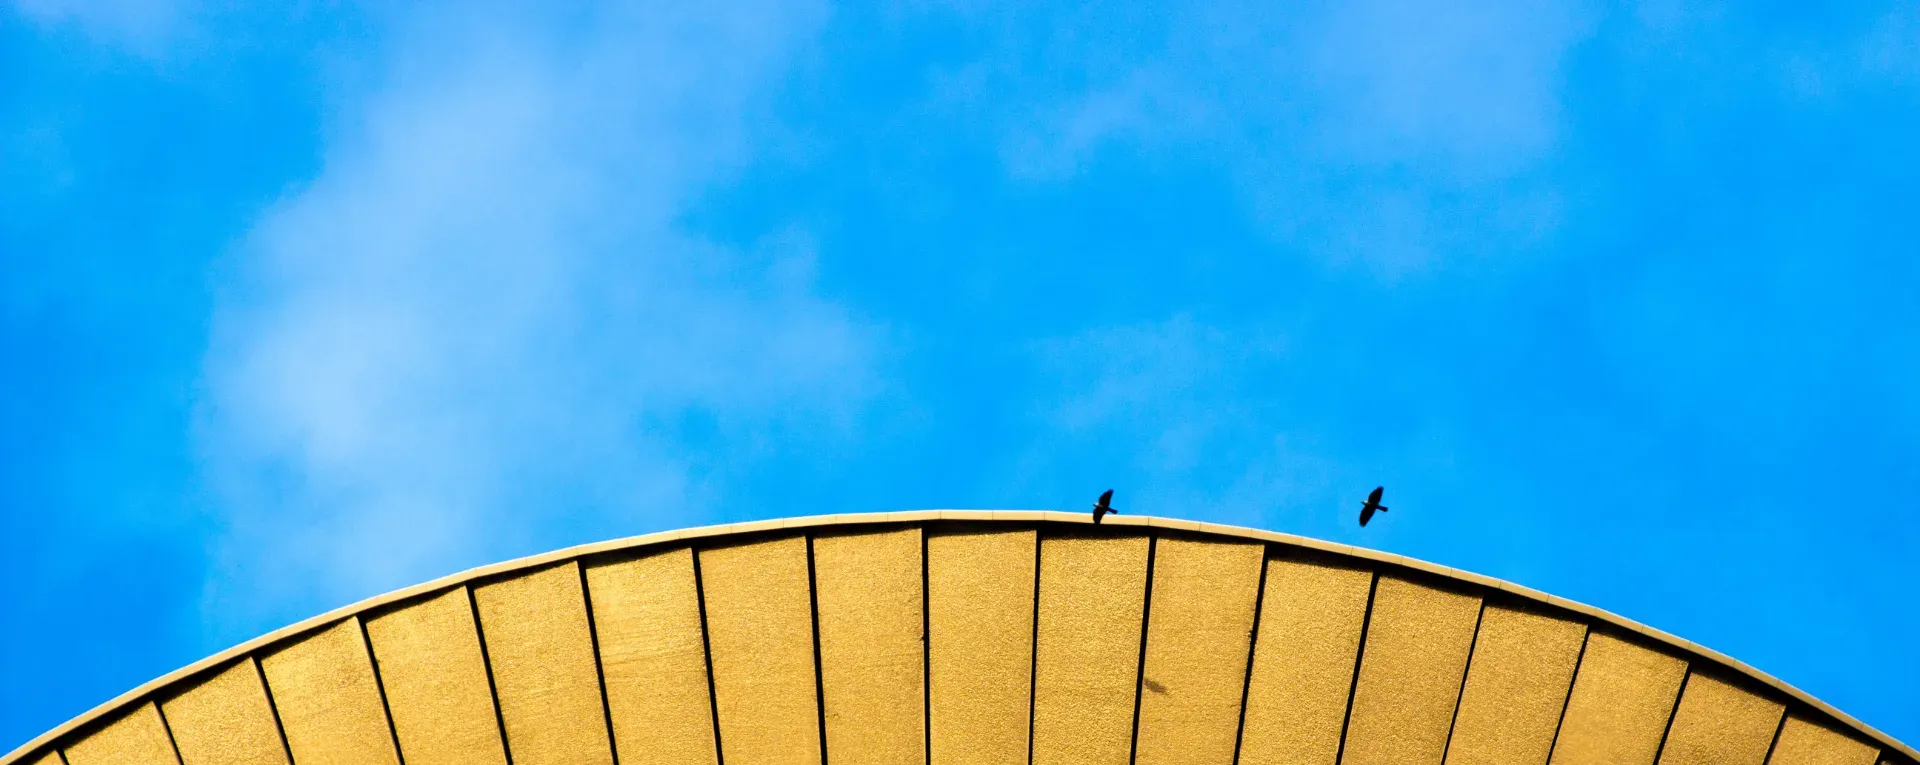 Round building and a blue sky